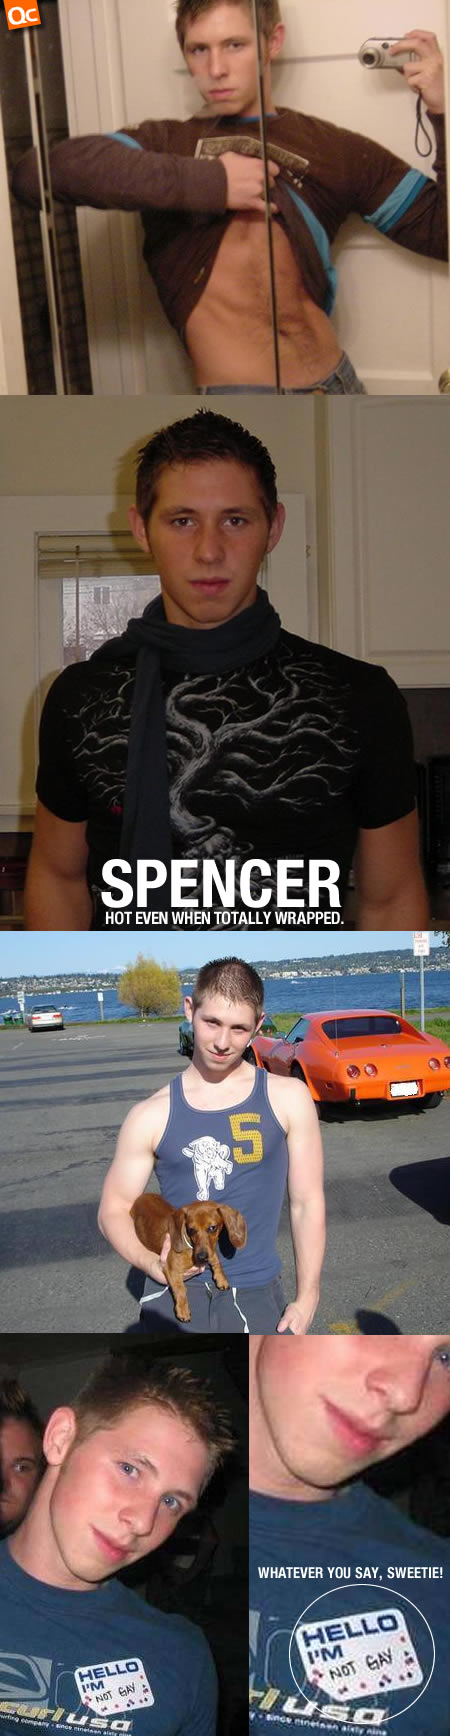 Spencer Elsewhere